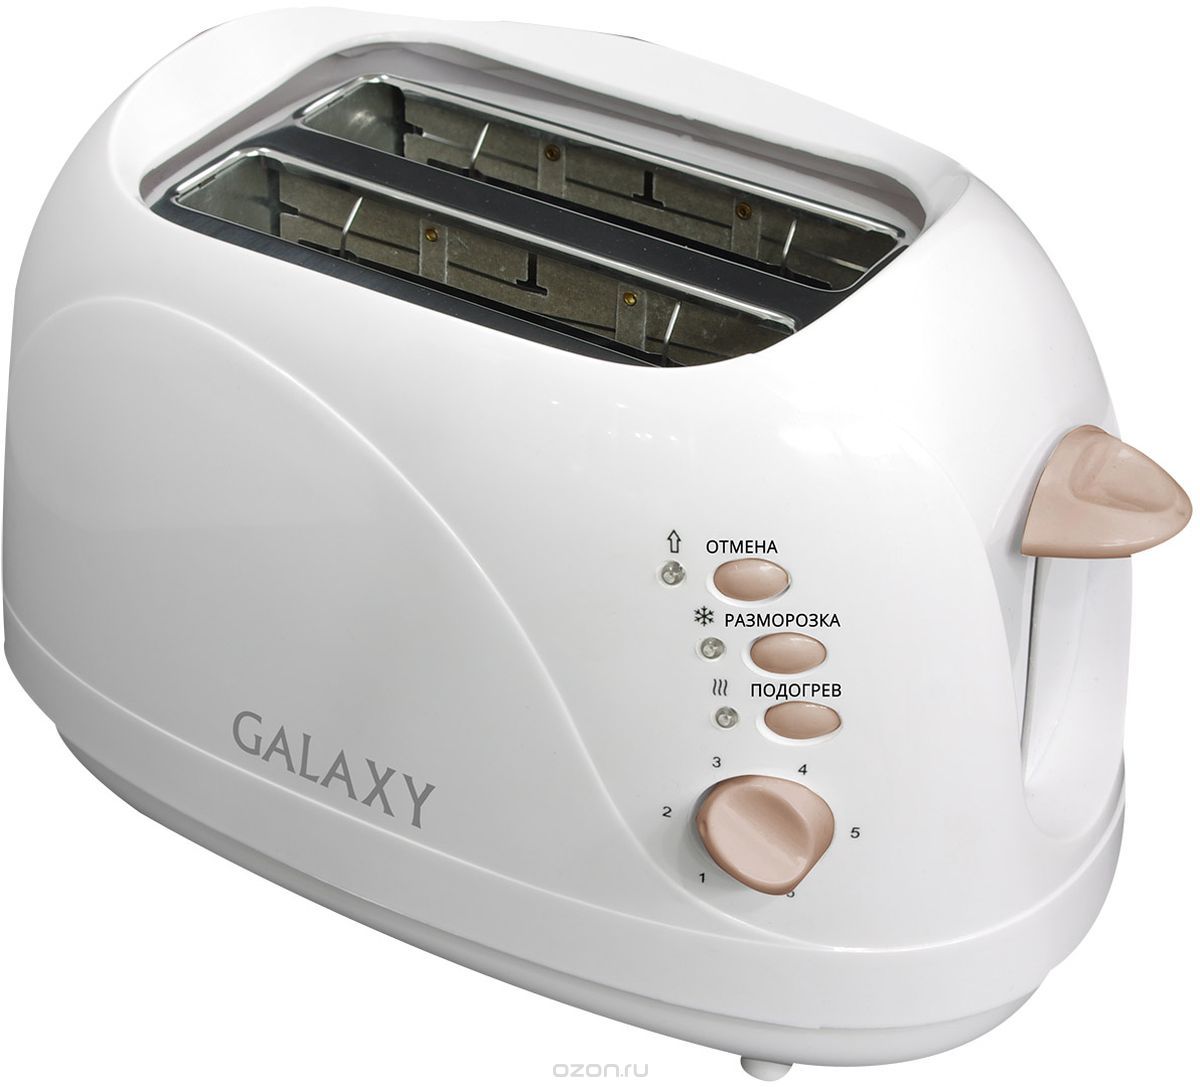  Galaxy GL 2904, White